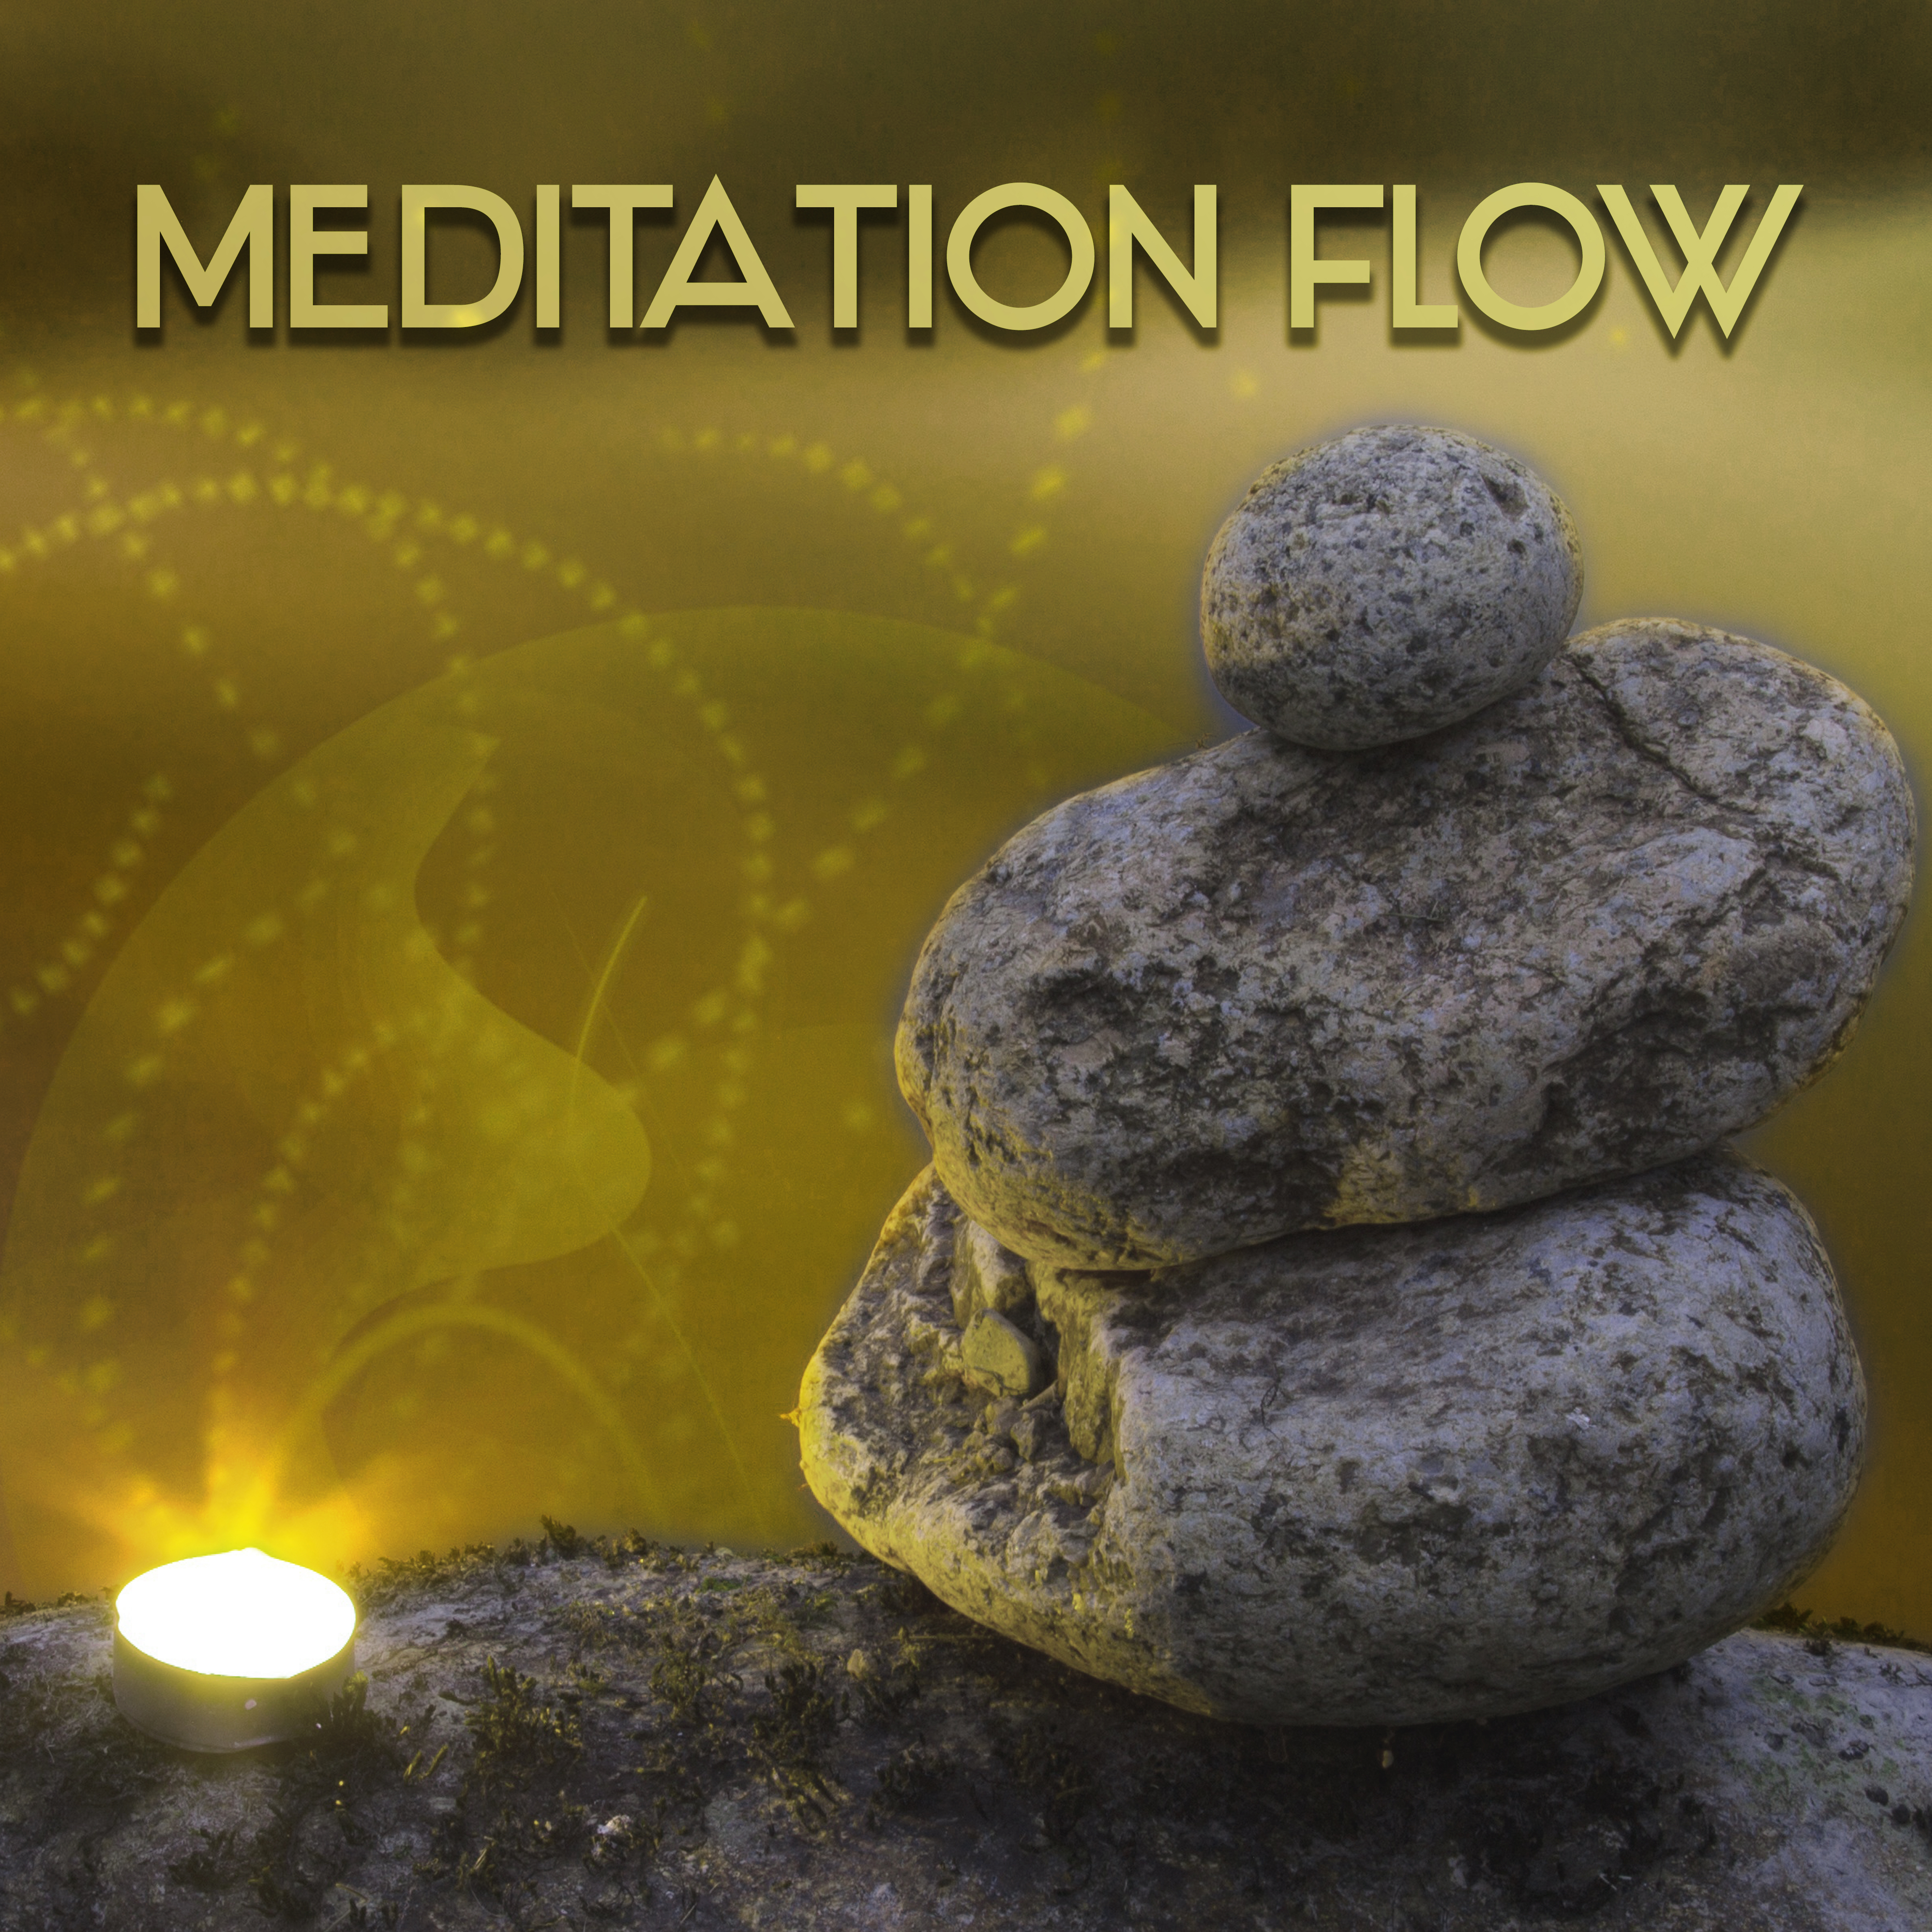 Meditation Flow  New Age Music for Yoga, Meditation, Mindfulness Training, Helpful for Deep Contemplation